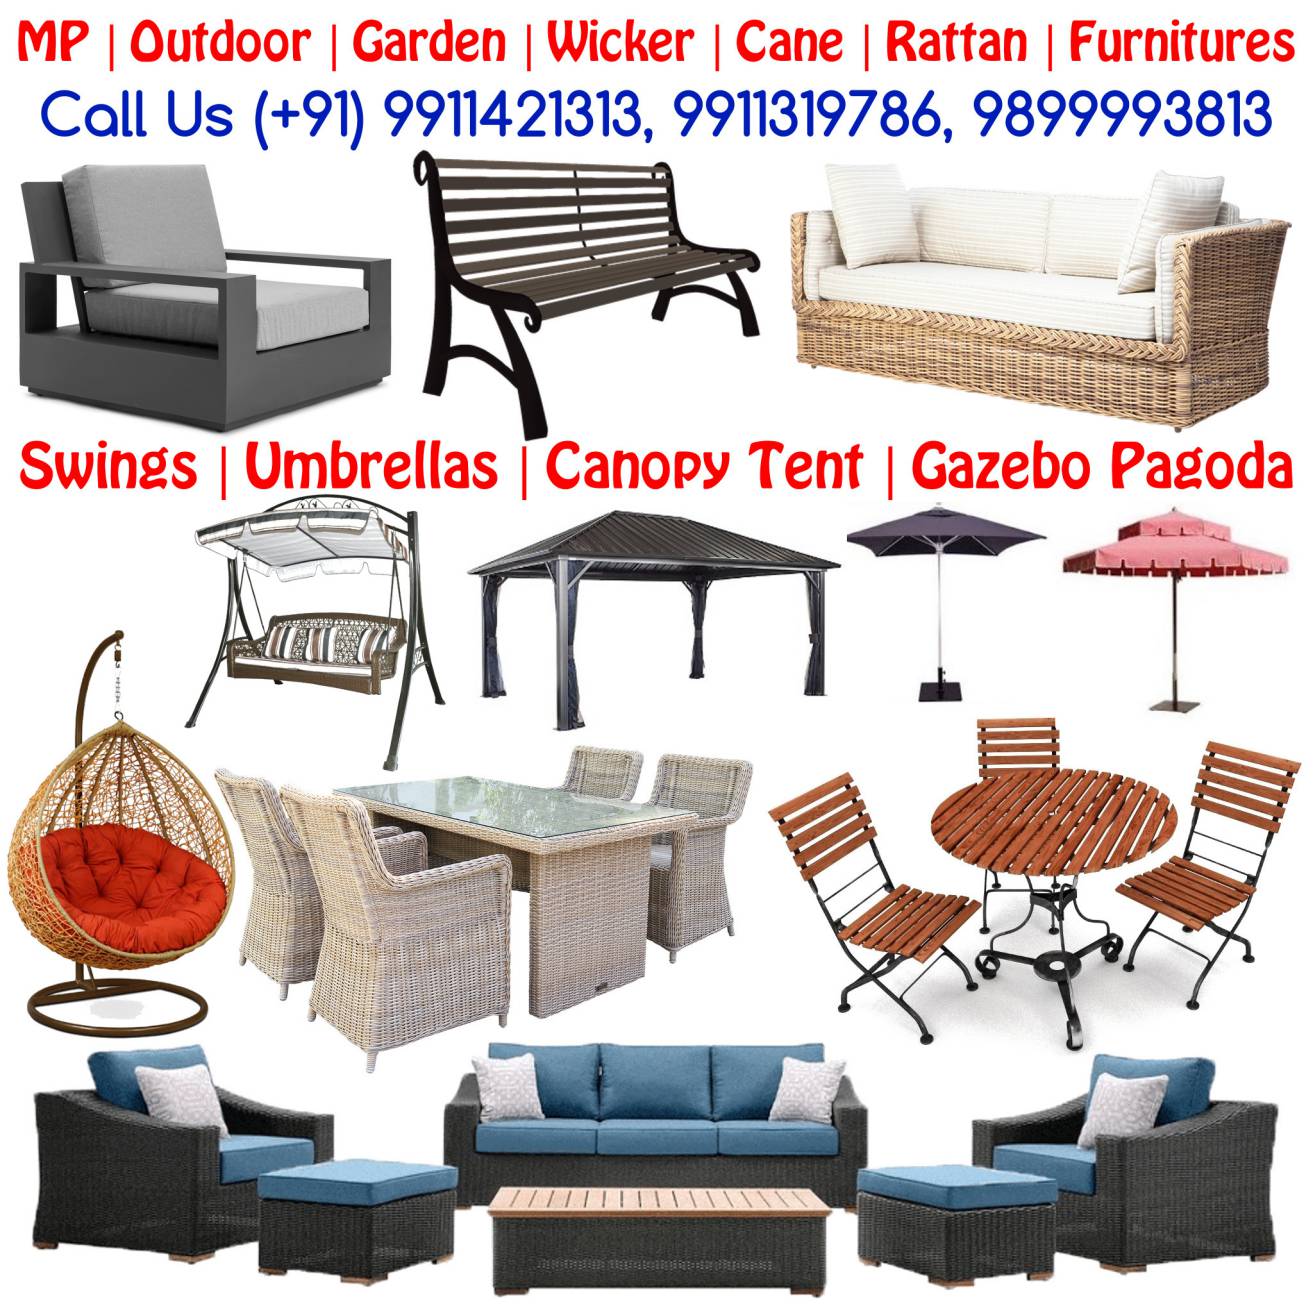 Outdoor Garden Wicker Cane Rattan Furnitures